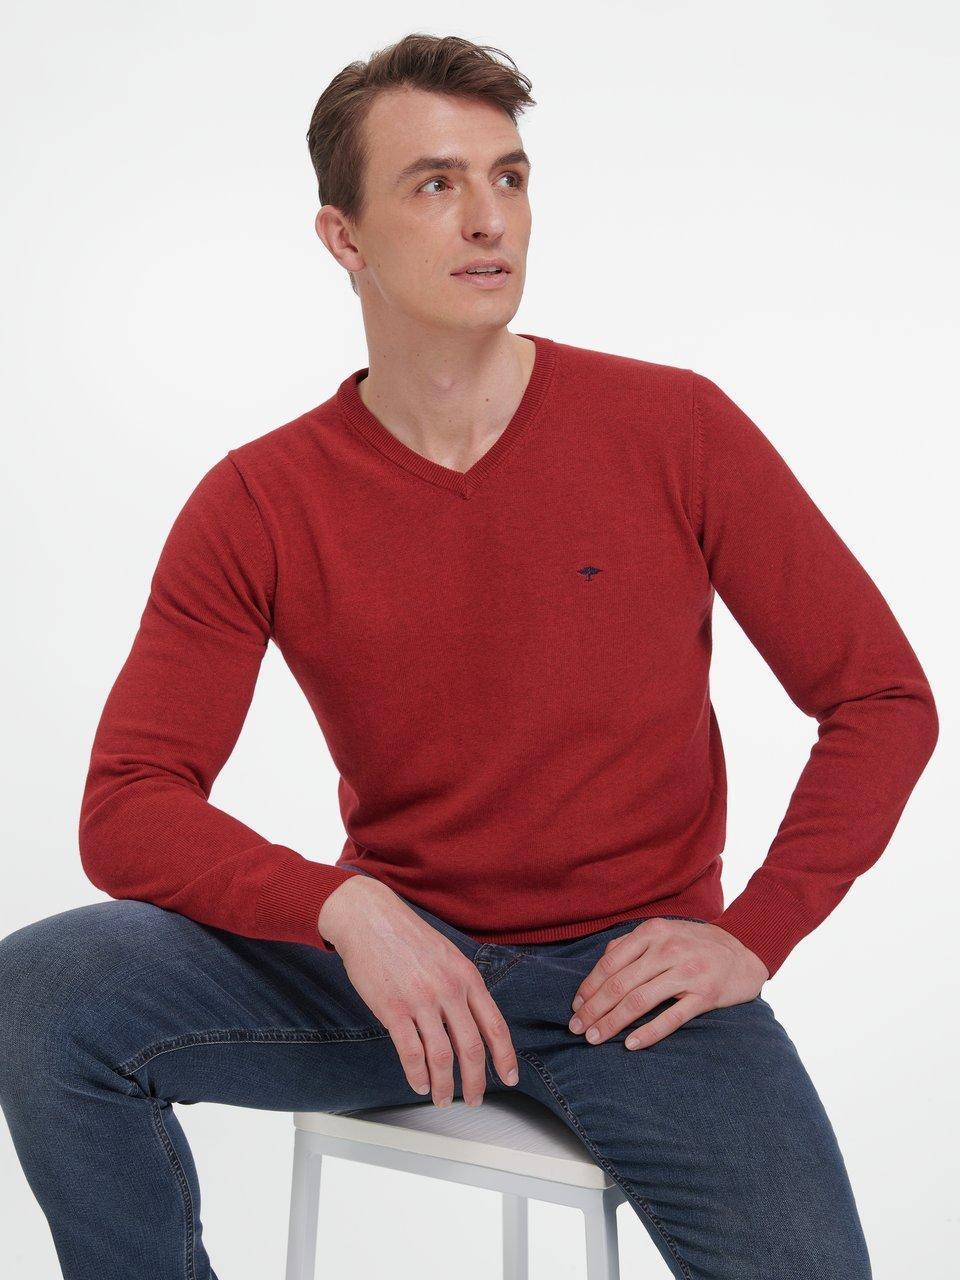 Rost/Rot Hatton - V-Ausschnitt - Pullover mit Fynch